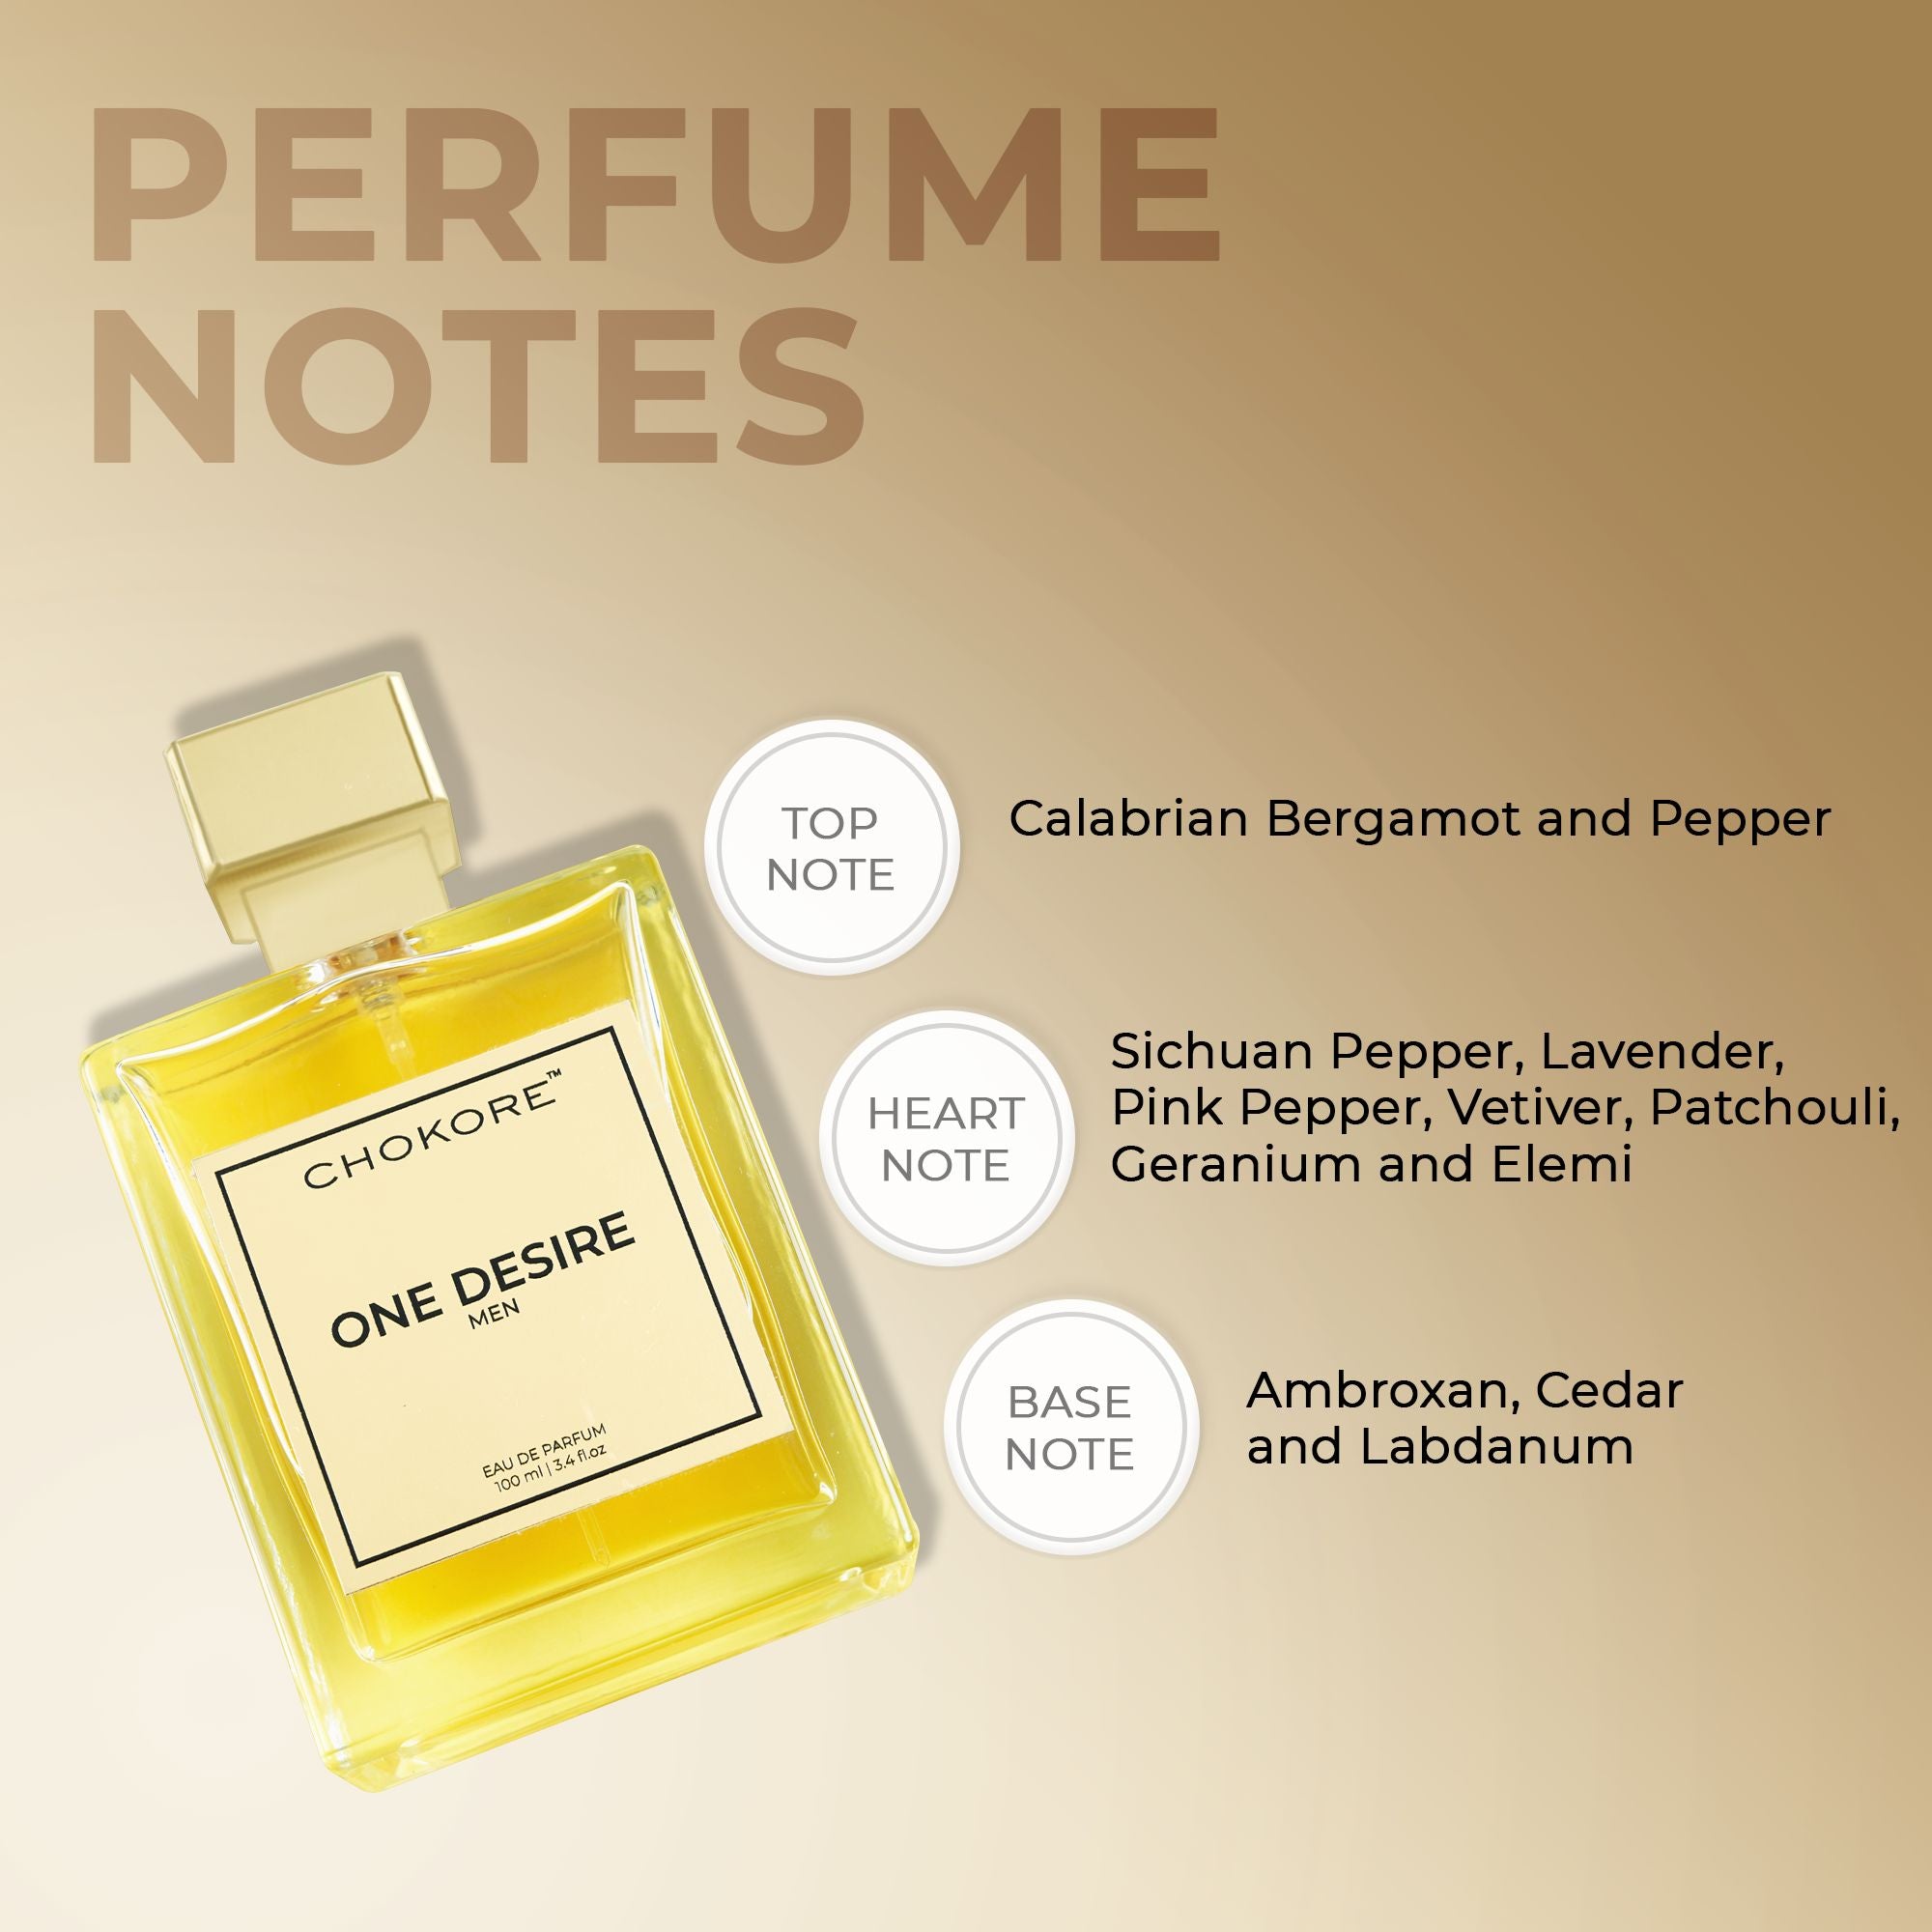 One Desire - Perfume For Men | 100 ml